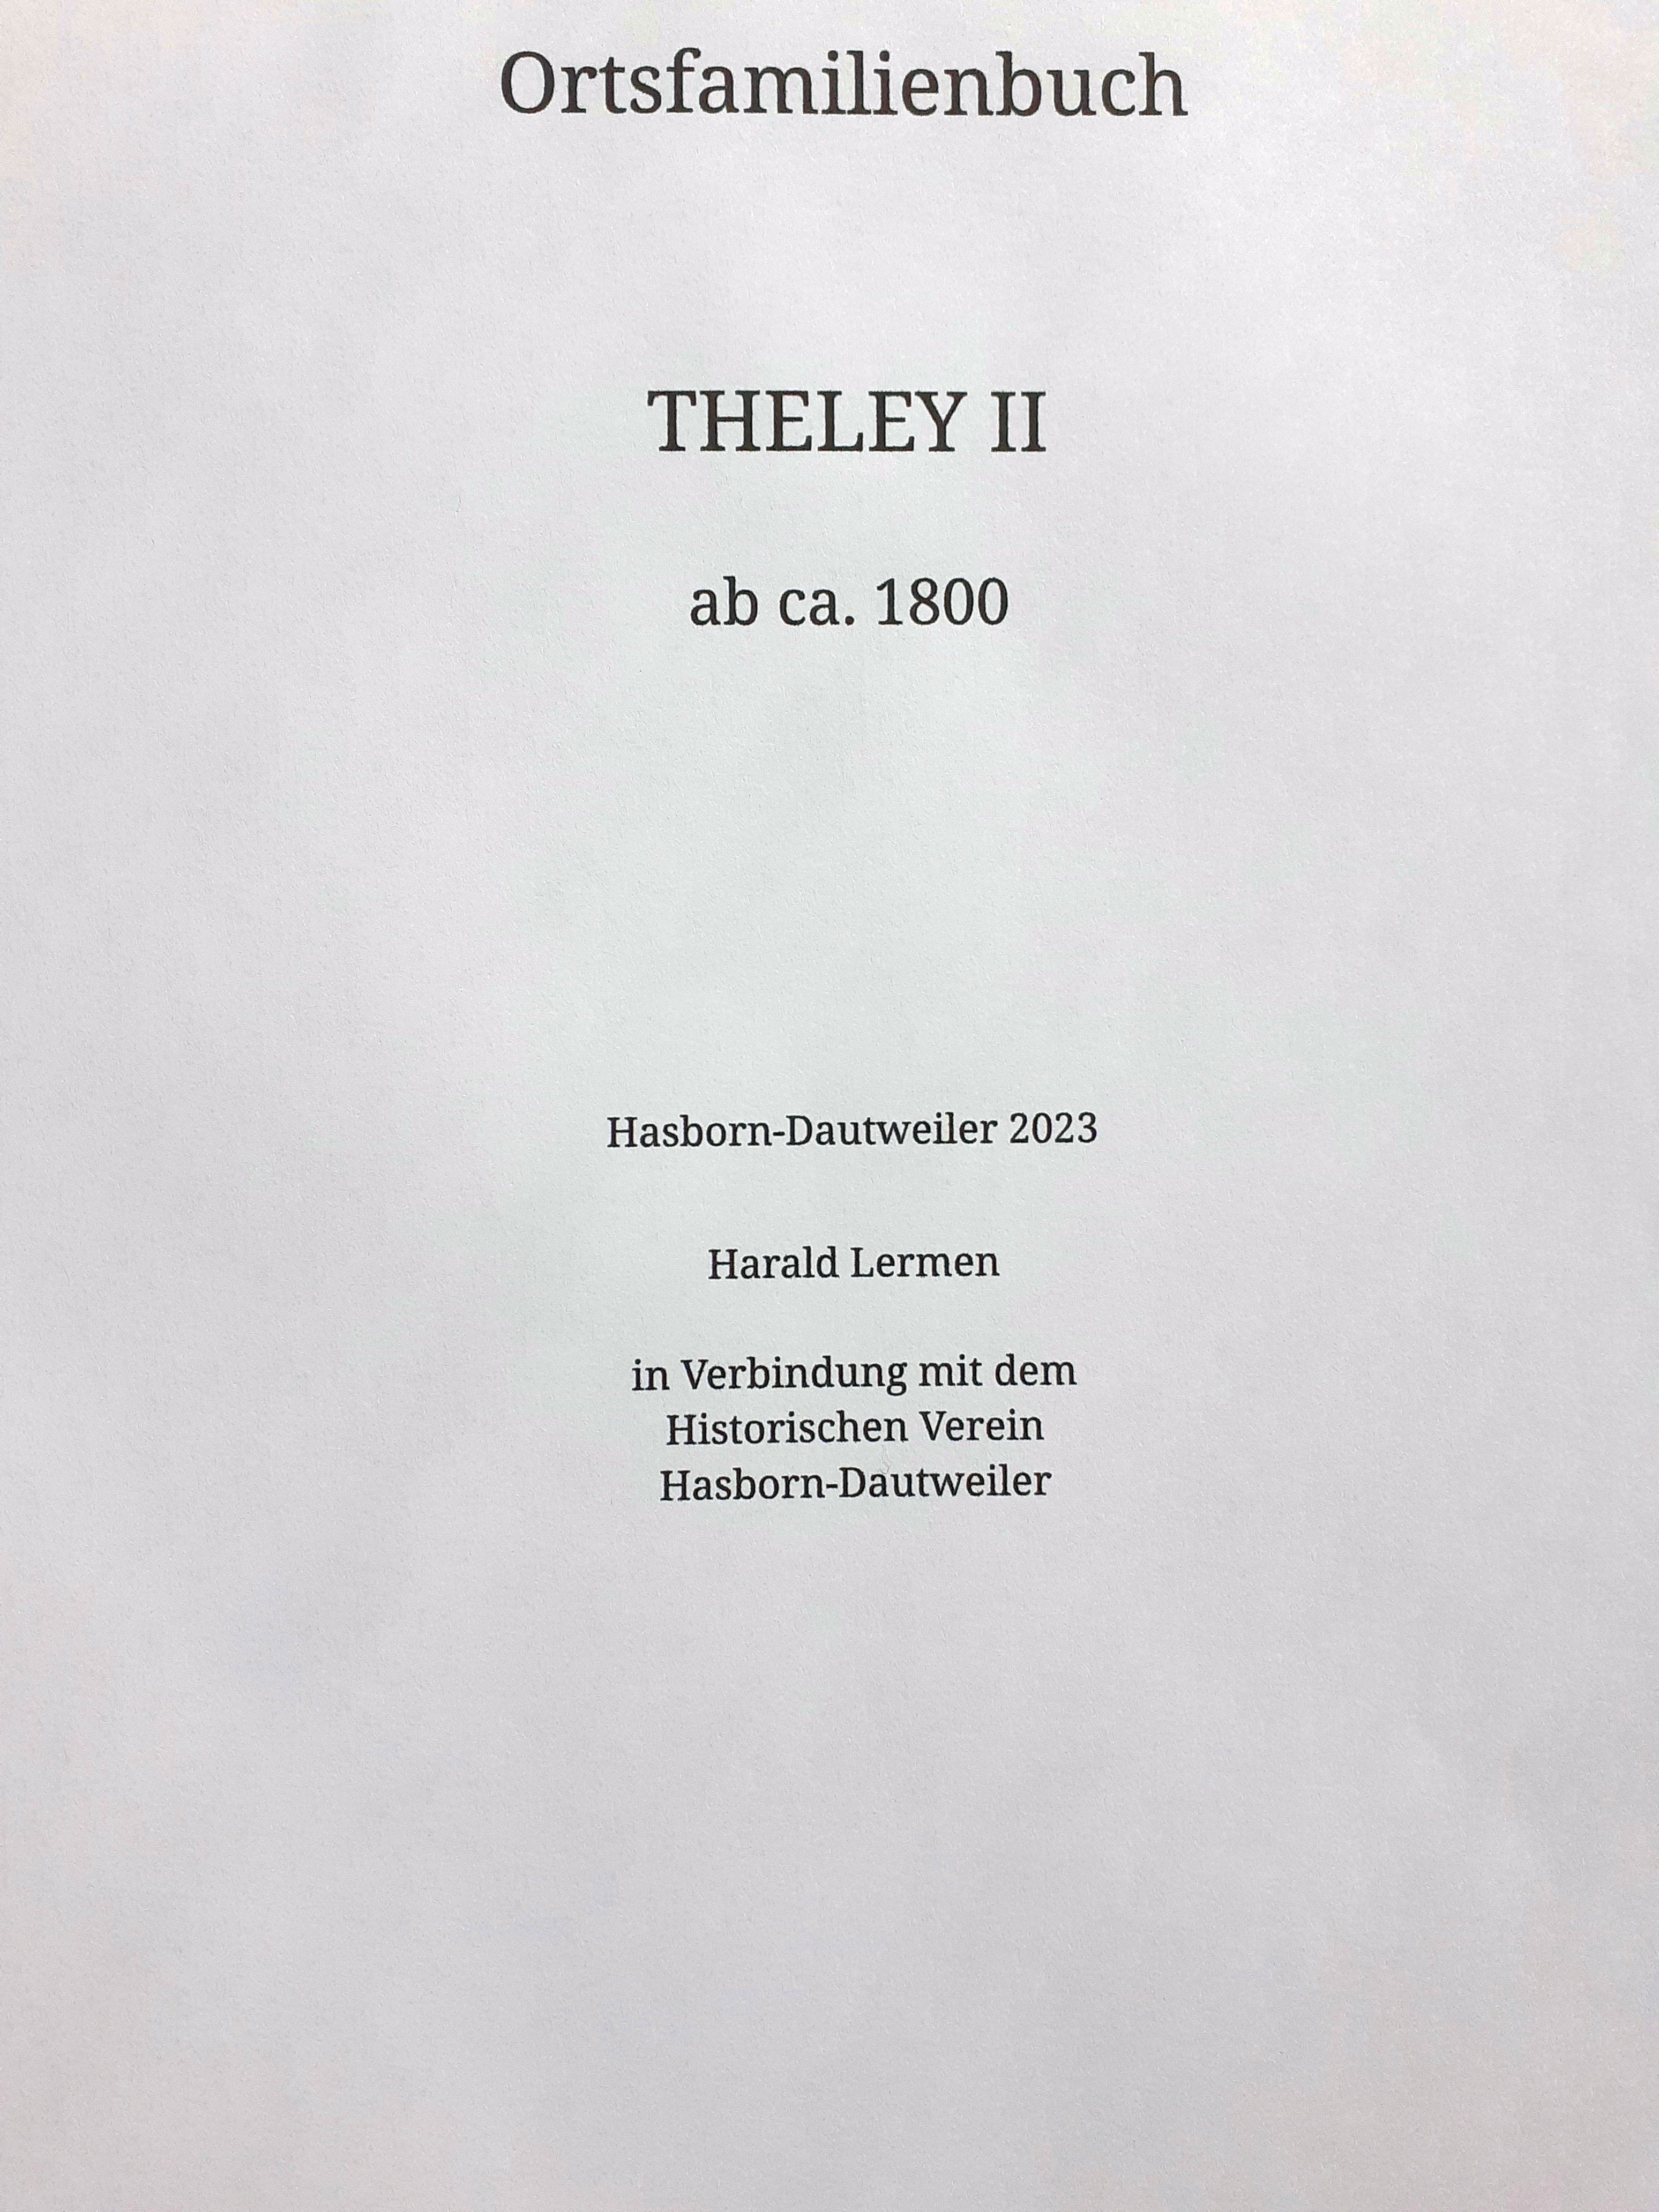 Ortsfamilienbuch Theley II